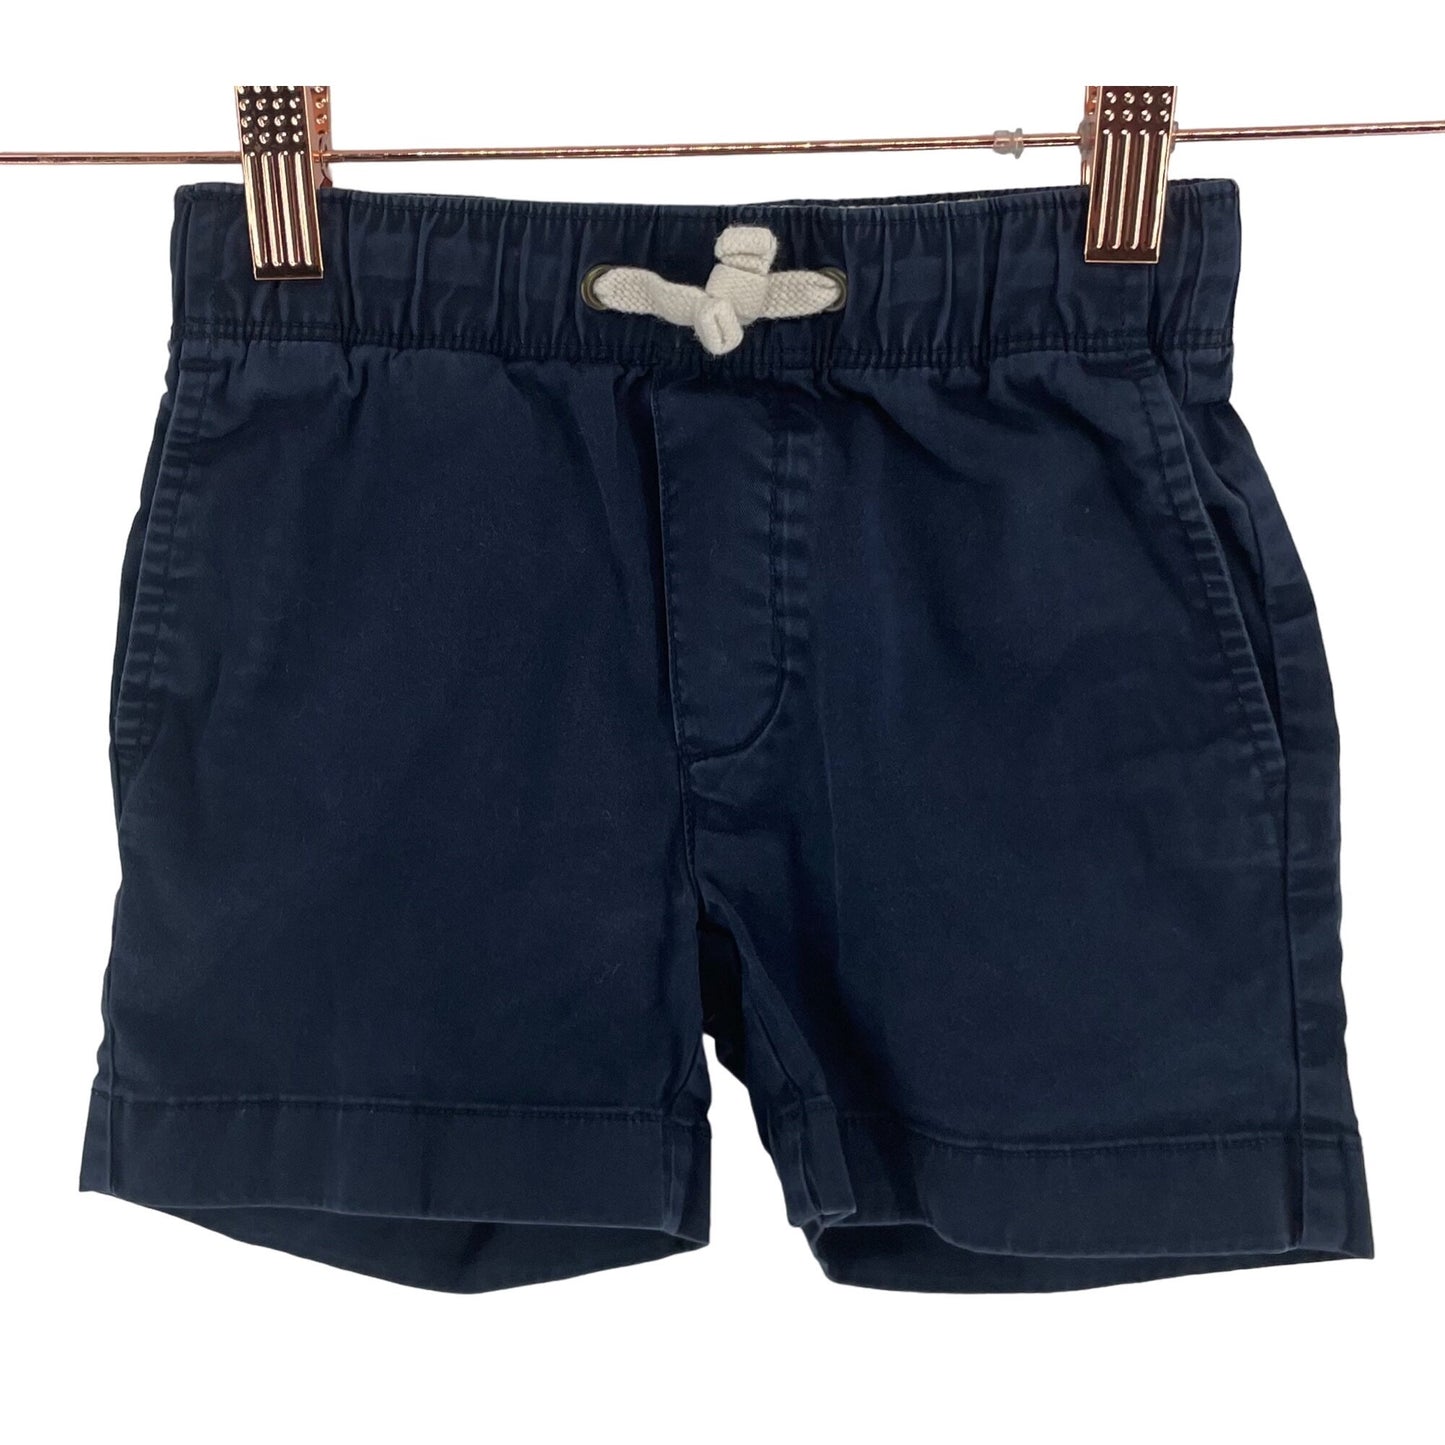 J. Crew Crewcuts Boy's Toddler Age 3 Navy Blue Elastic Waist Band Cargo Shorts